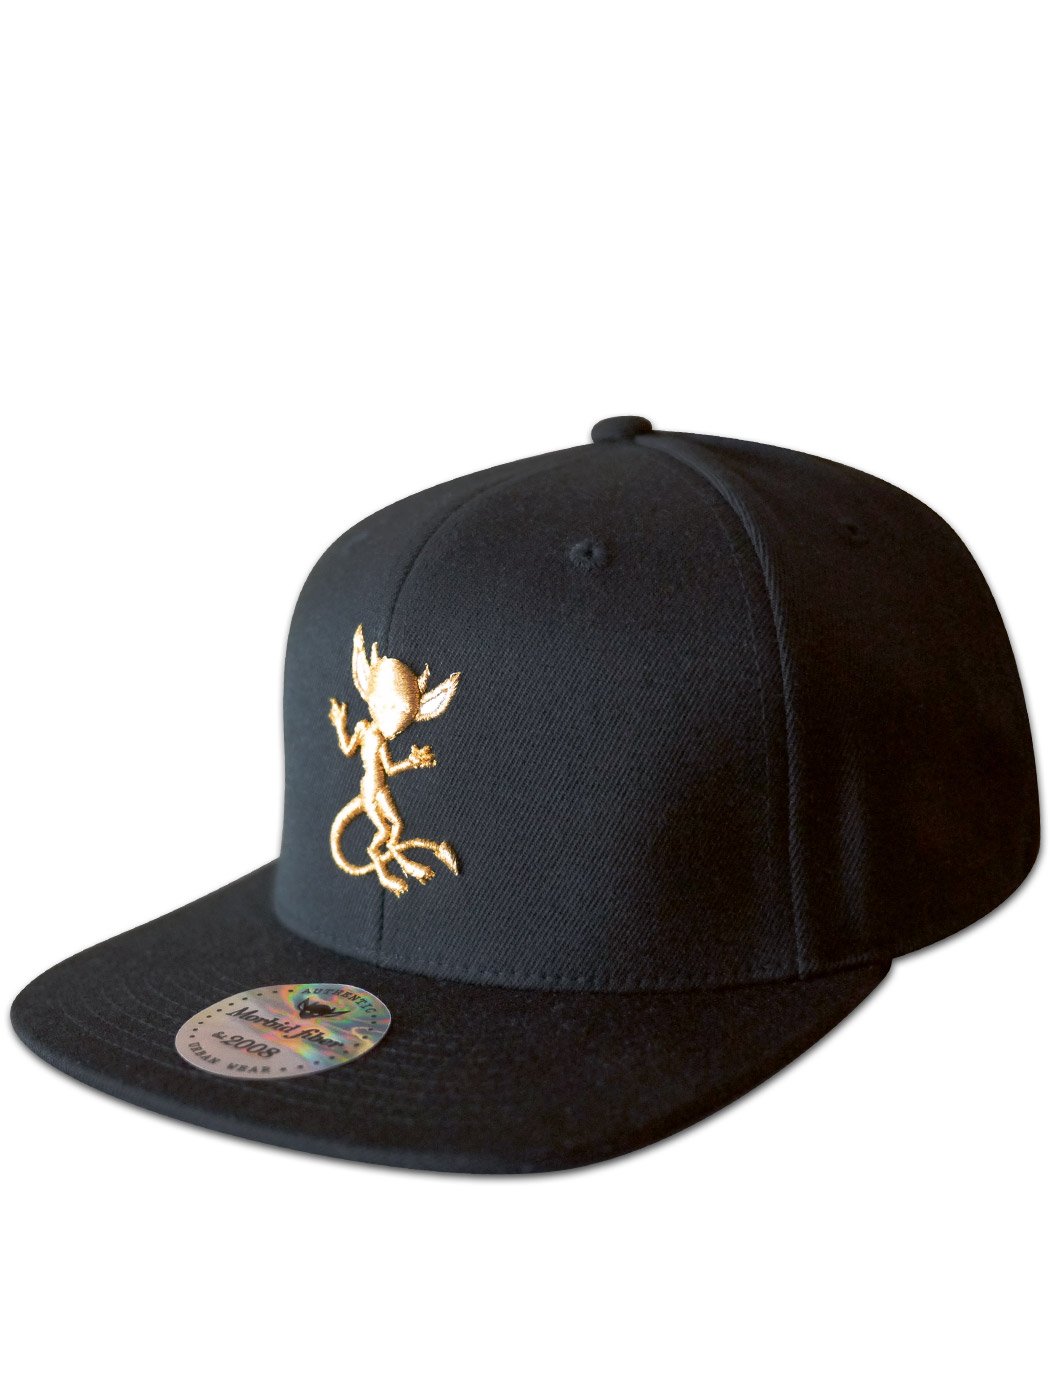 Morbid Fiber Los Angeles Clothing Streetwear Snapback GOLD IMP Hat